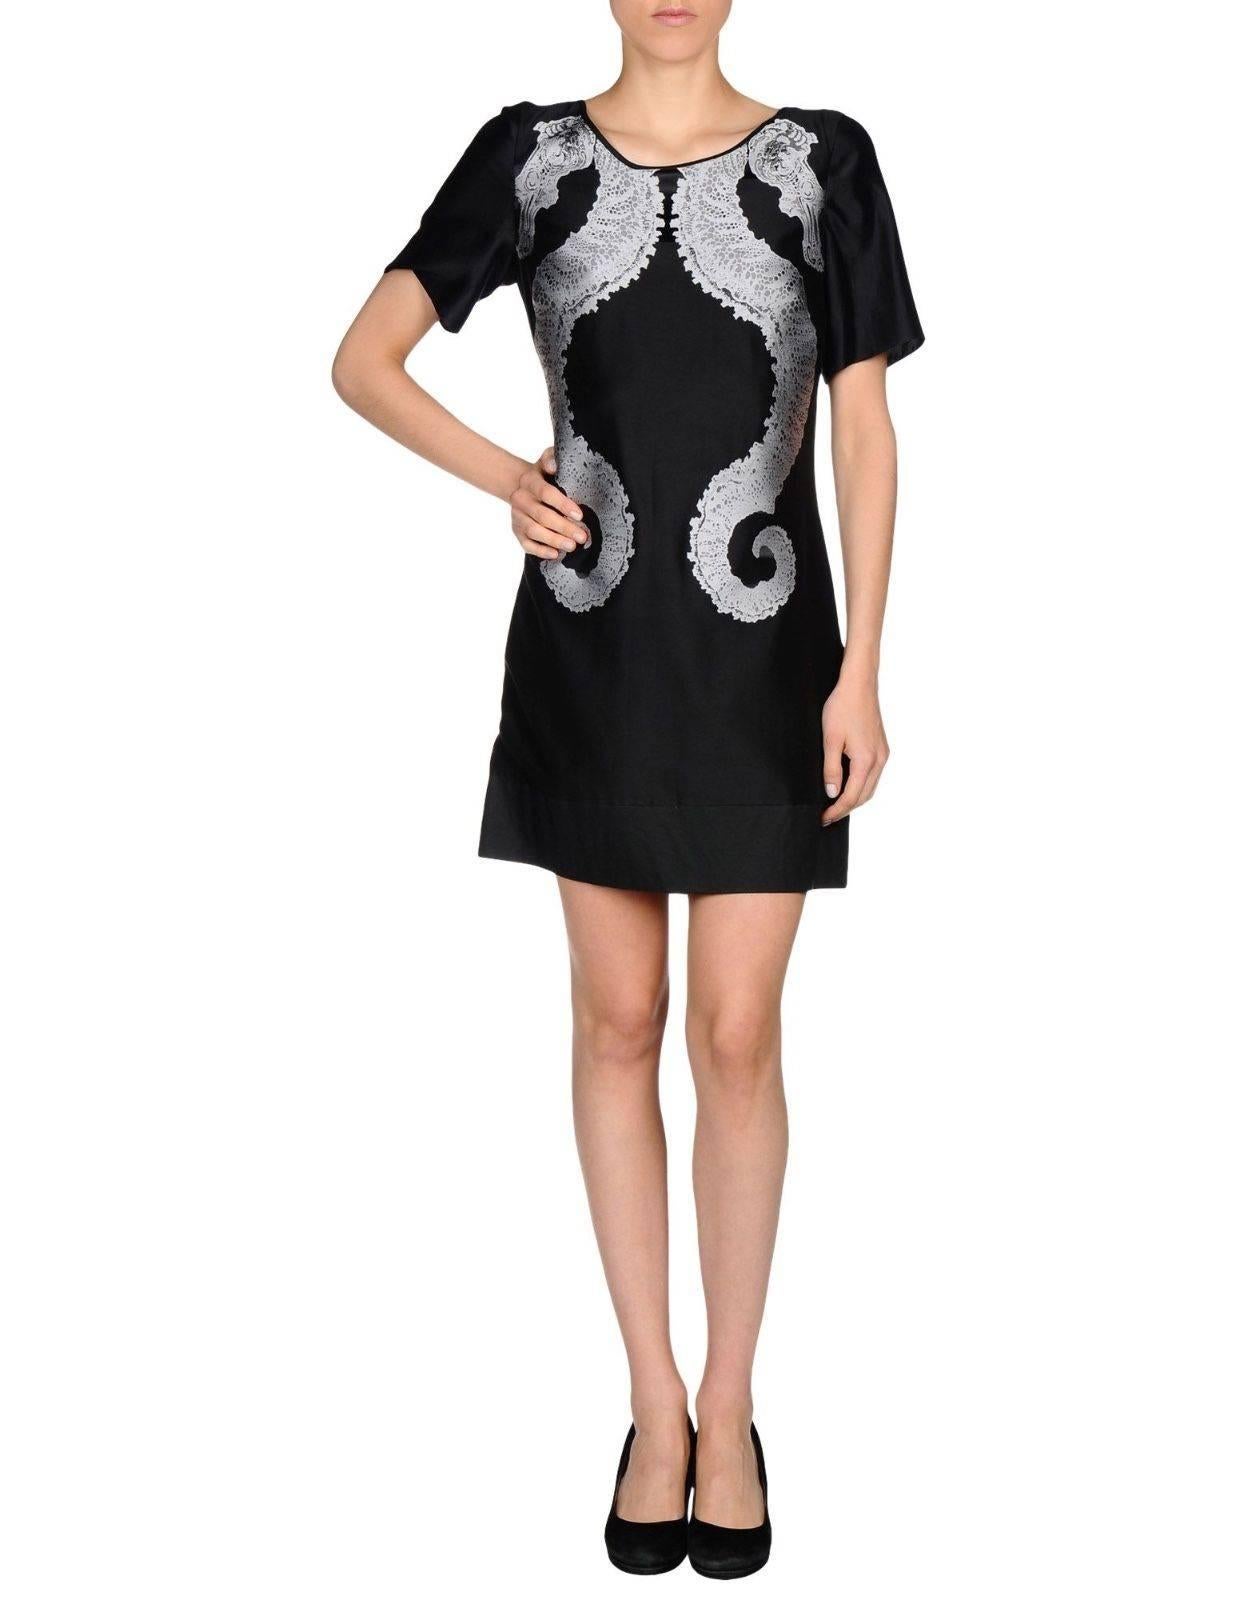 New Helmut Lang black seahorse printed shift dress US 4 UK 8  For Sale 1